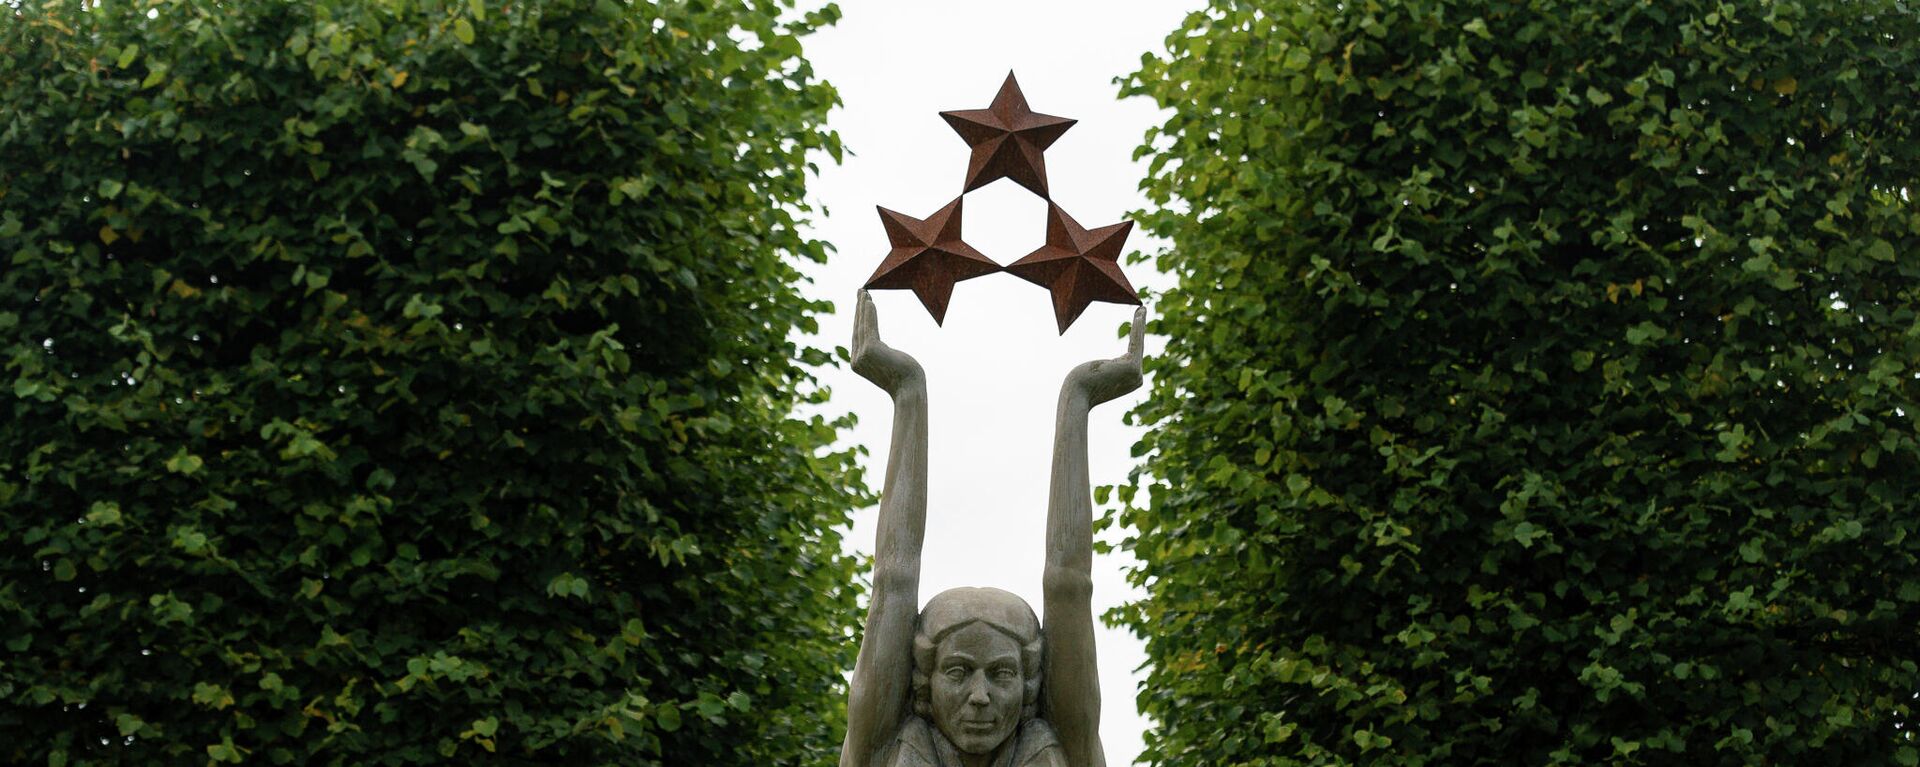 Инсталляция Будда-Свобода - Sputnik Латвия, 1920, 26.09.2021